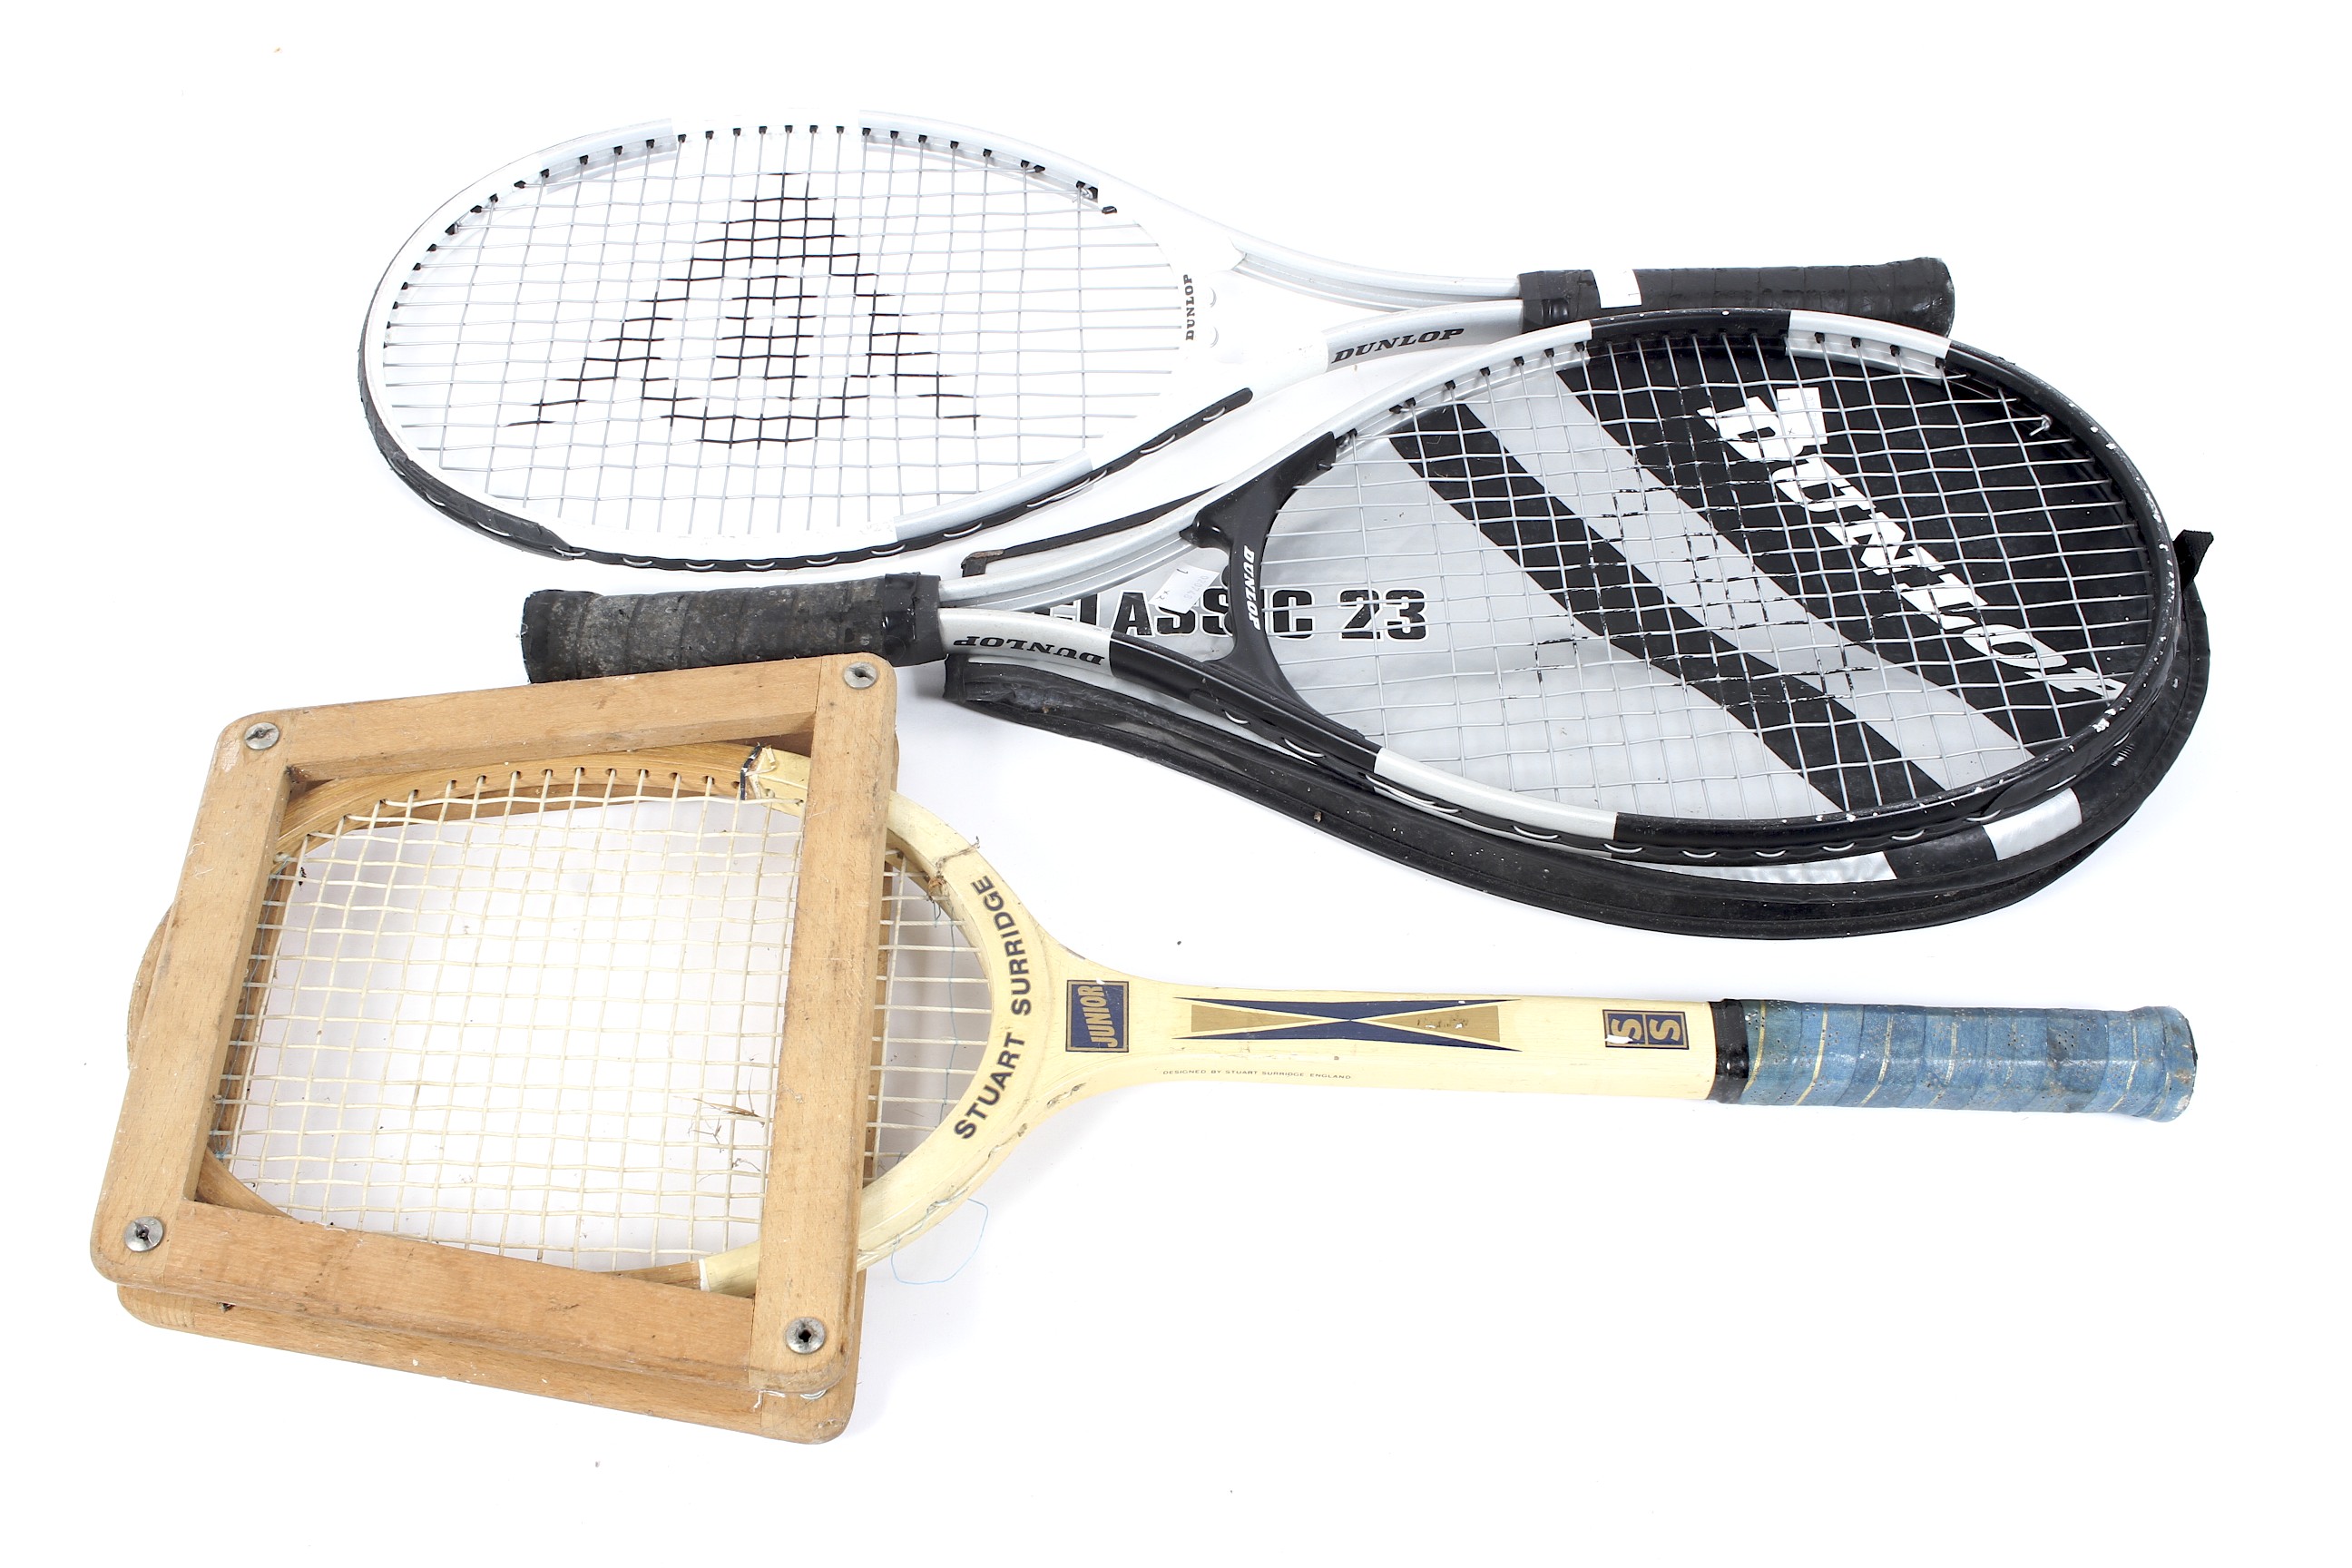 Three tennis rackets,